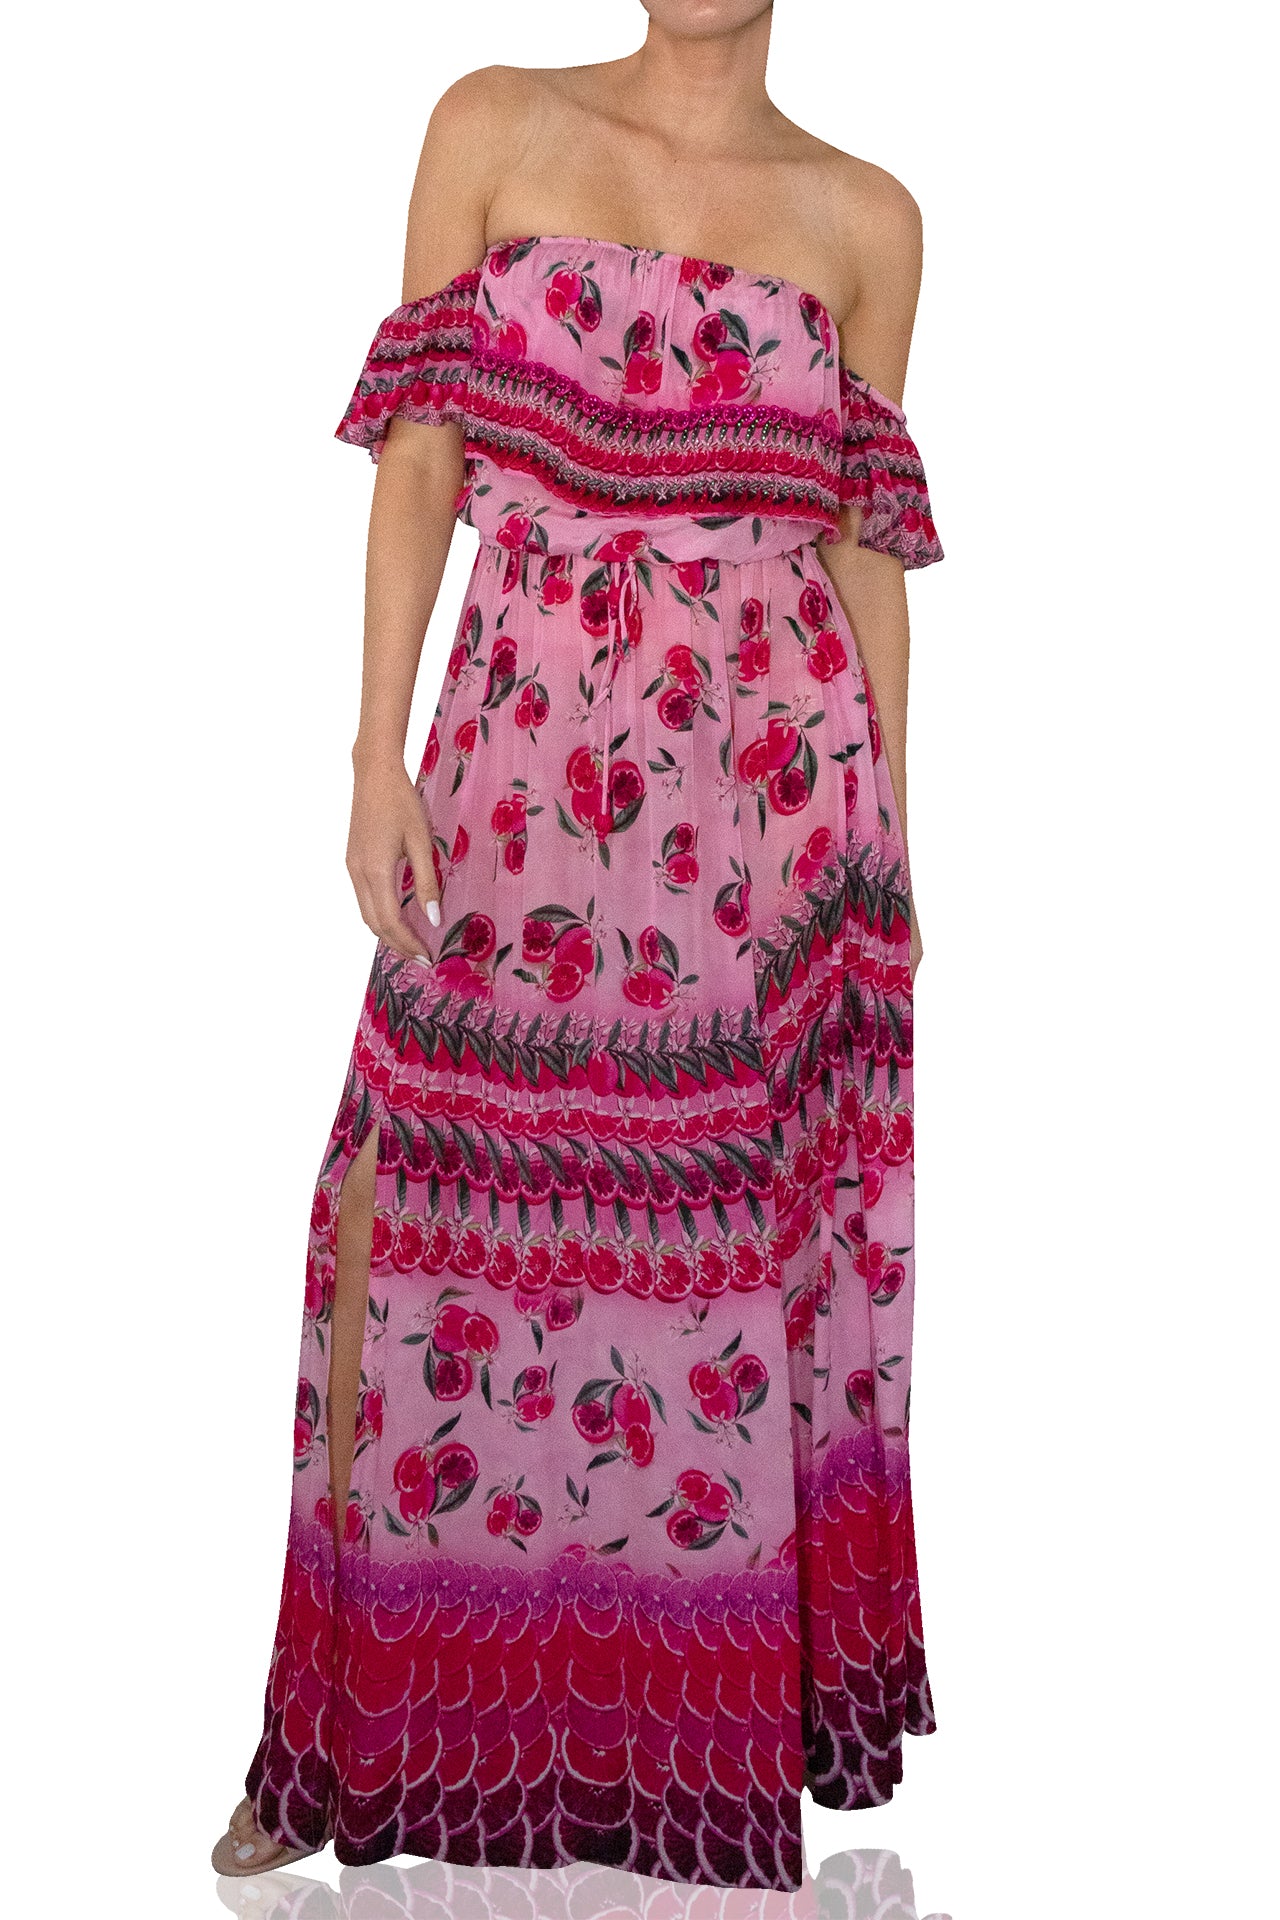 Designer Fuchsia Dress | Long Maxi Dress For Women | Shahida Parides